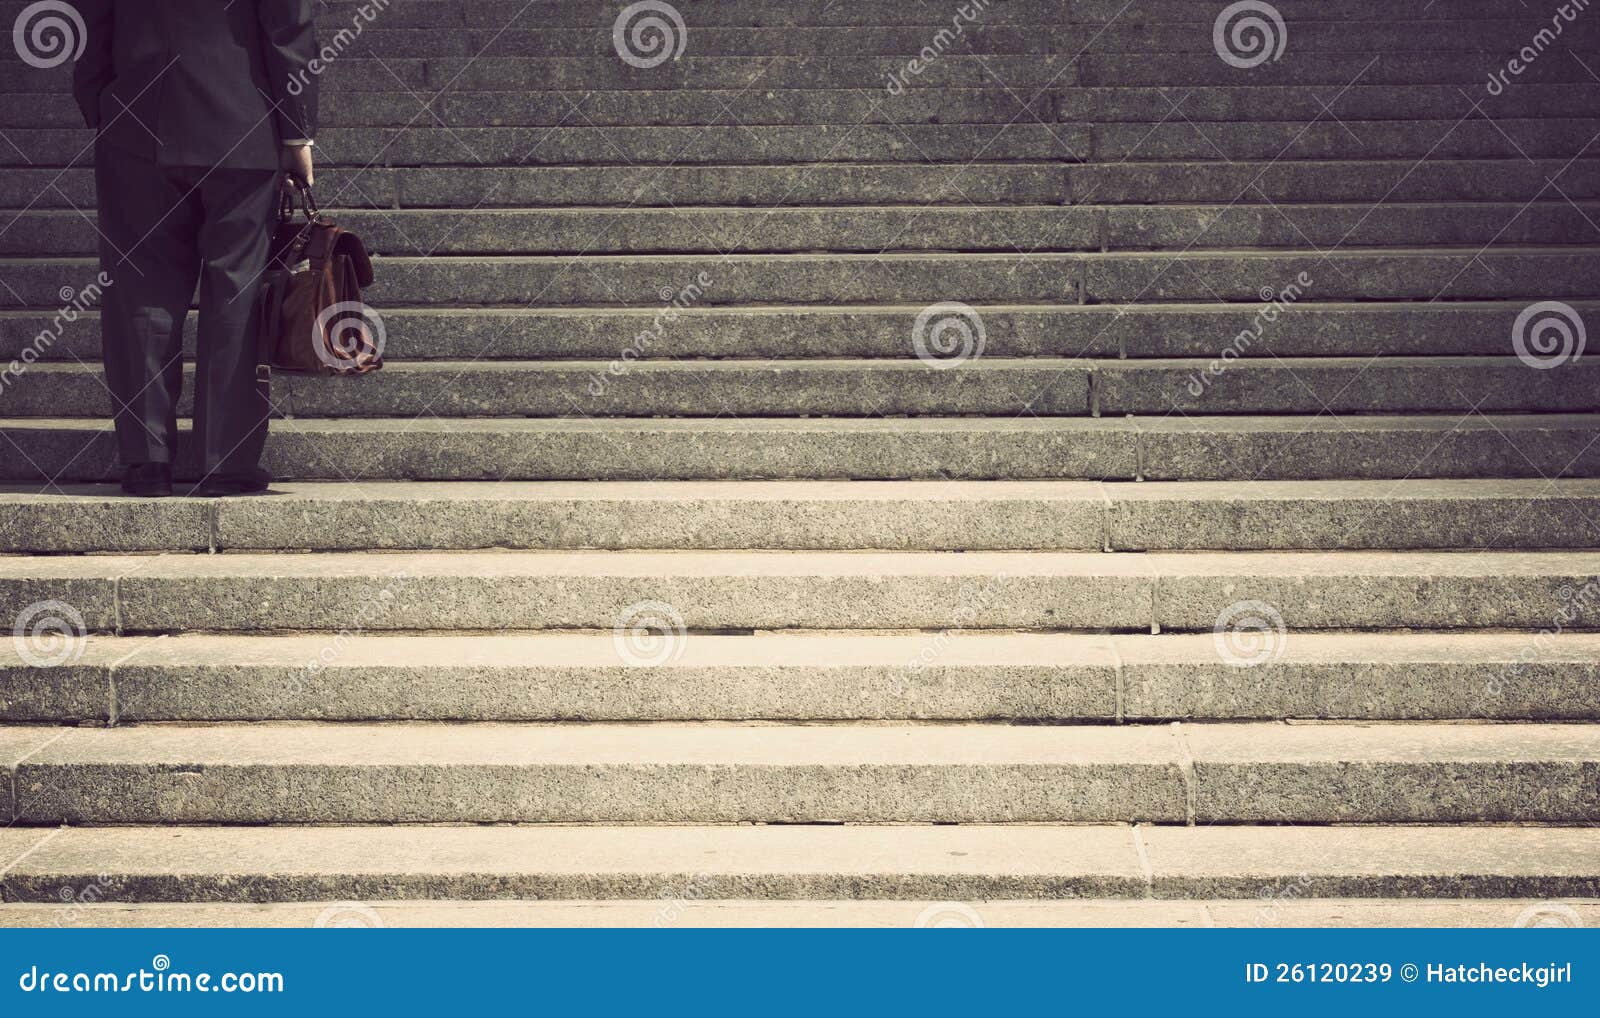 businessman on steps